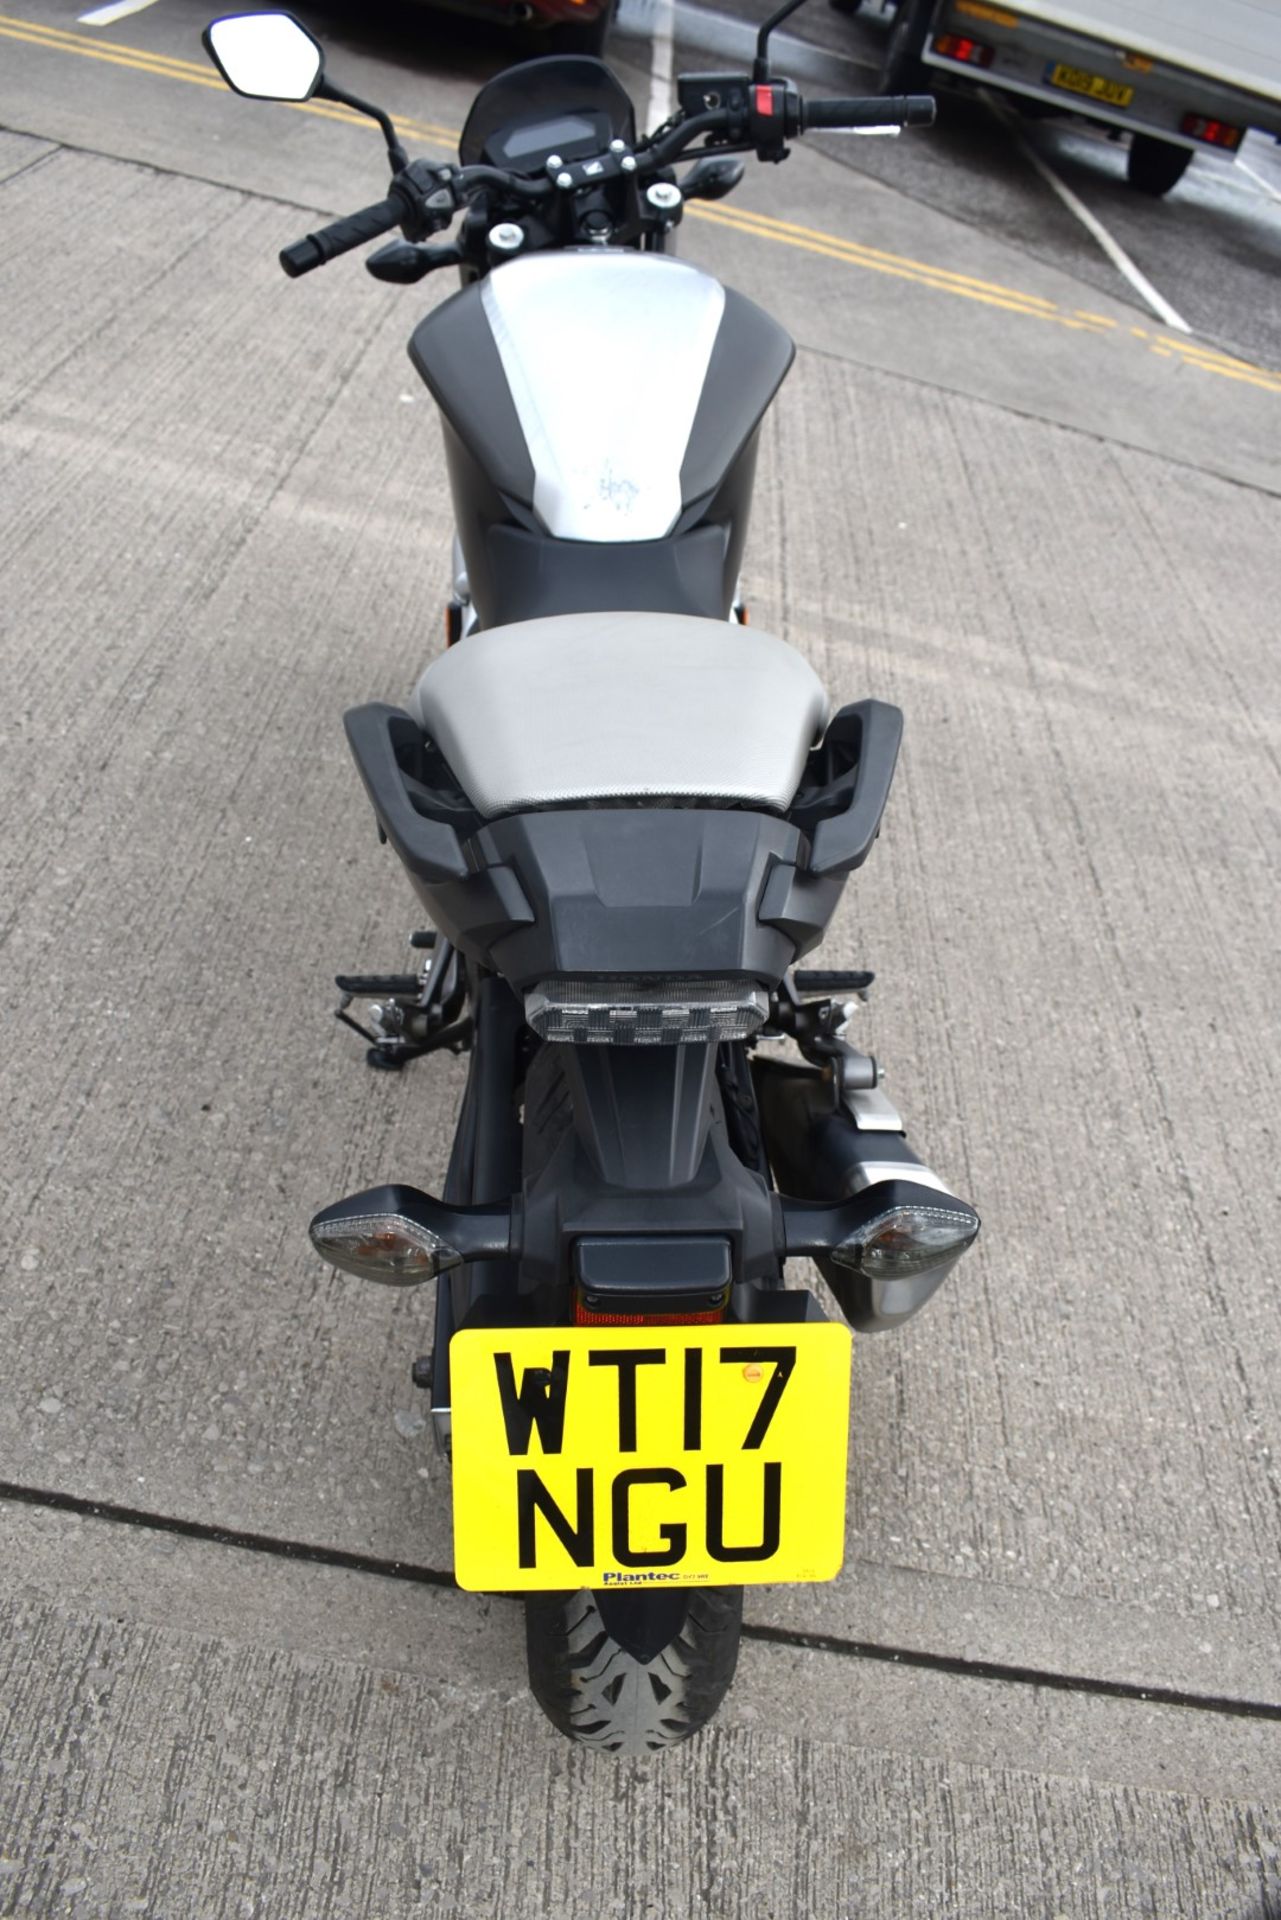 2017 Honda NC750 S Motorcycle - WT17 NGU - Mileage: 19,434 Miles - Image 13 of 26